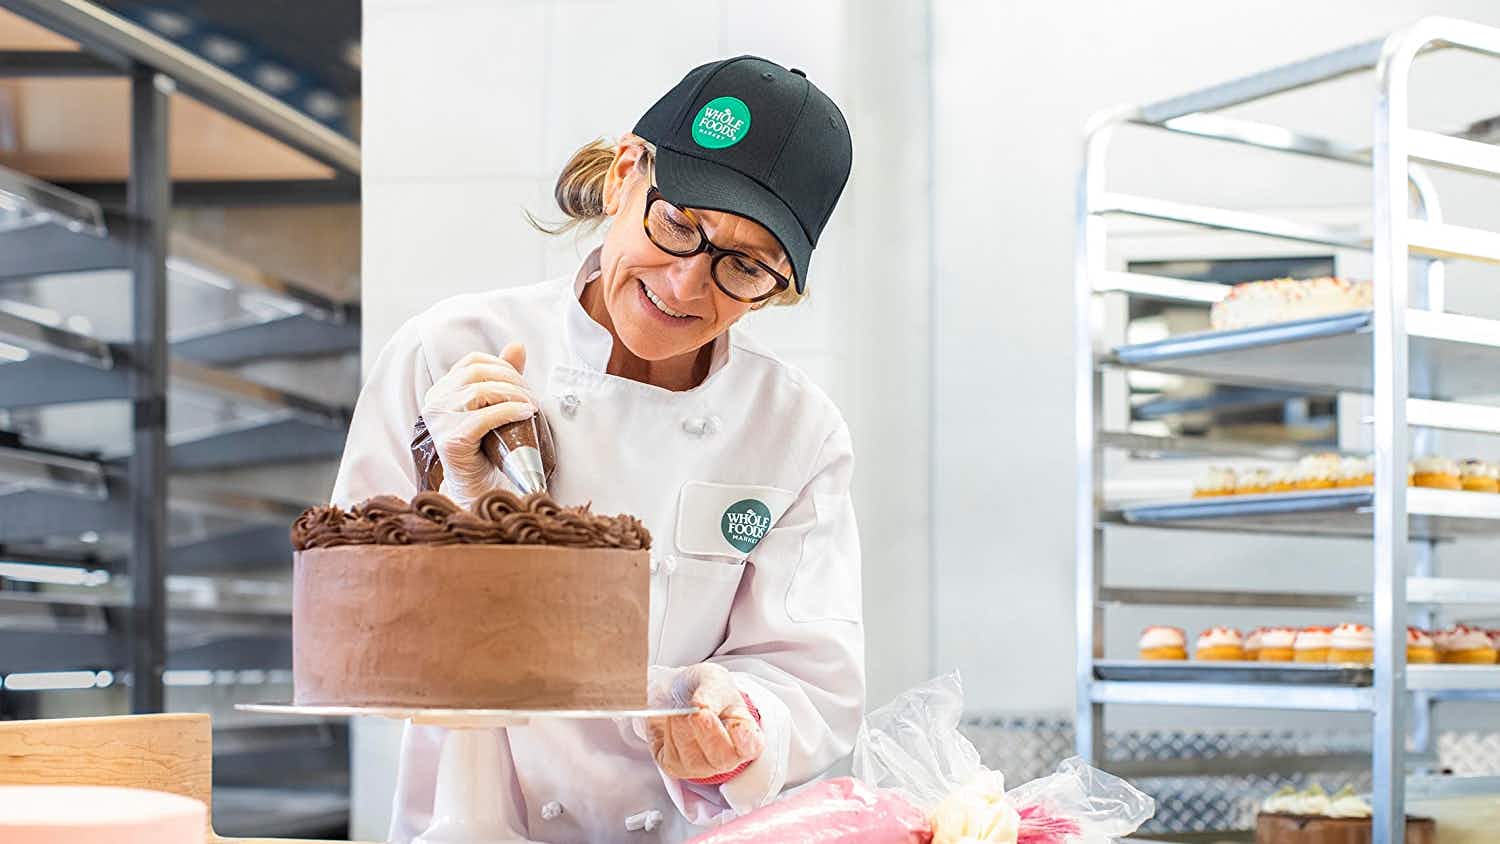 Cake decorator preparing a chocolate cake at Whole Foods